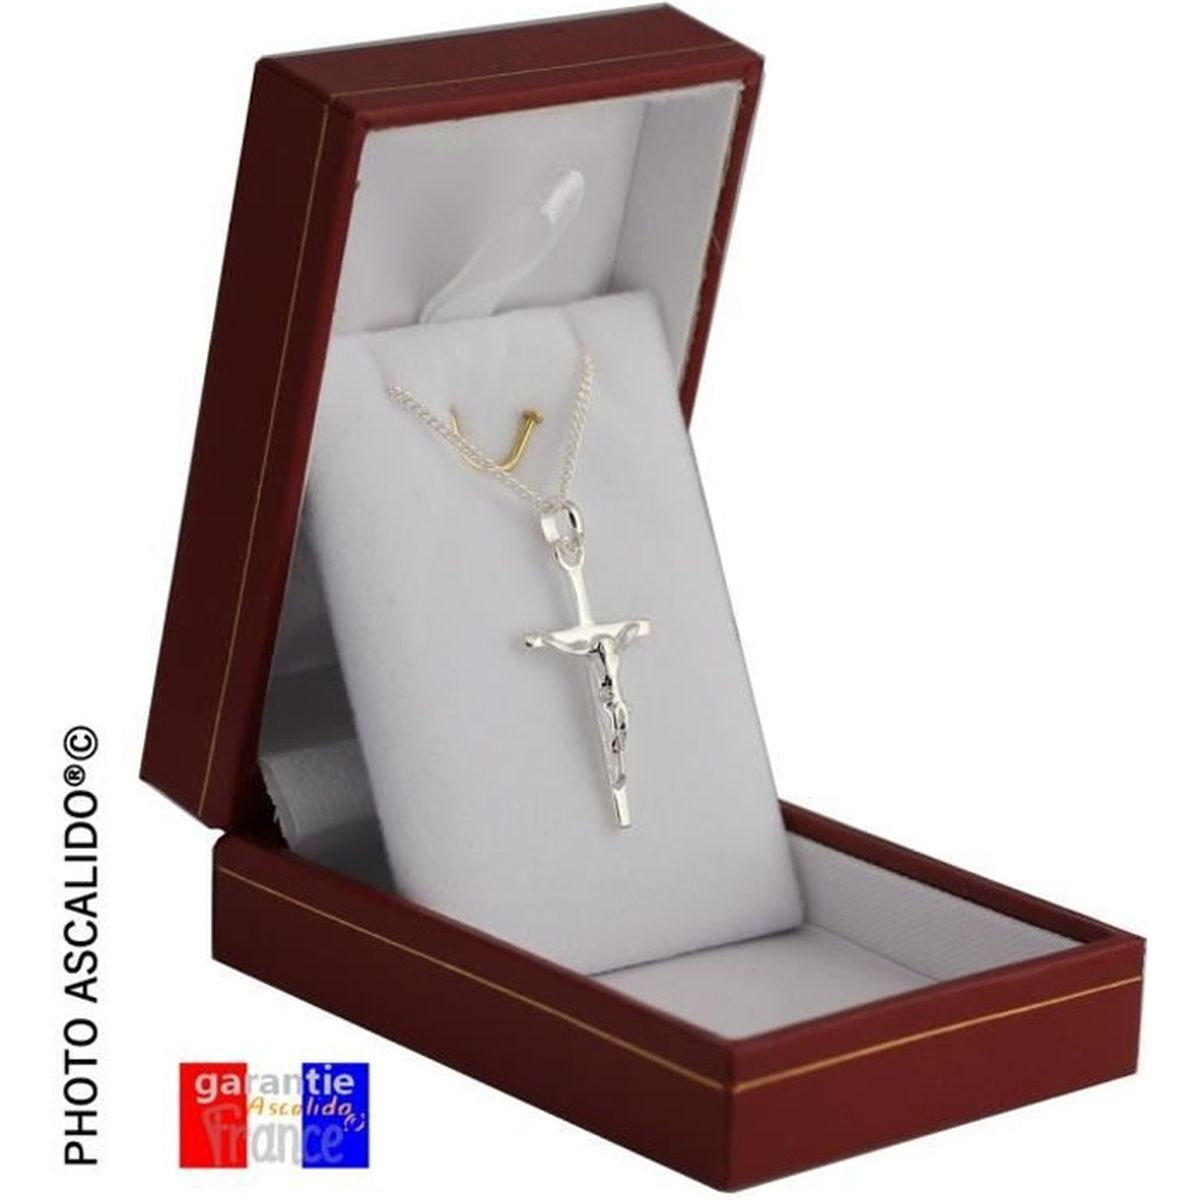 Chaine offerte 24" 7MM Pendentif Collier Croix Jesus Christ Argent Homme 